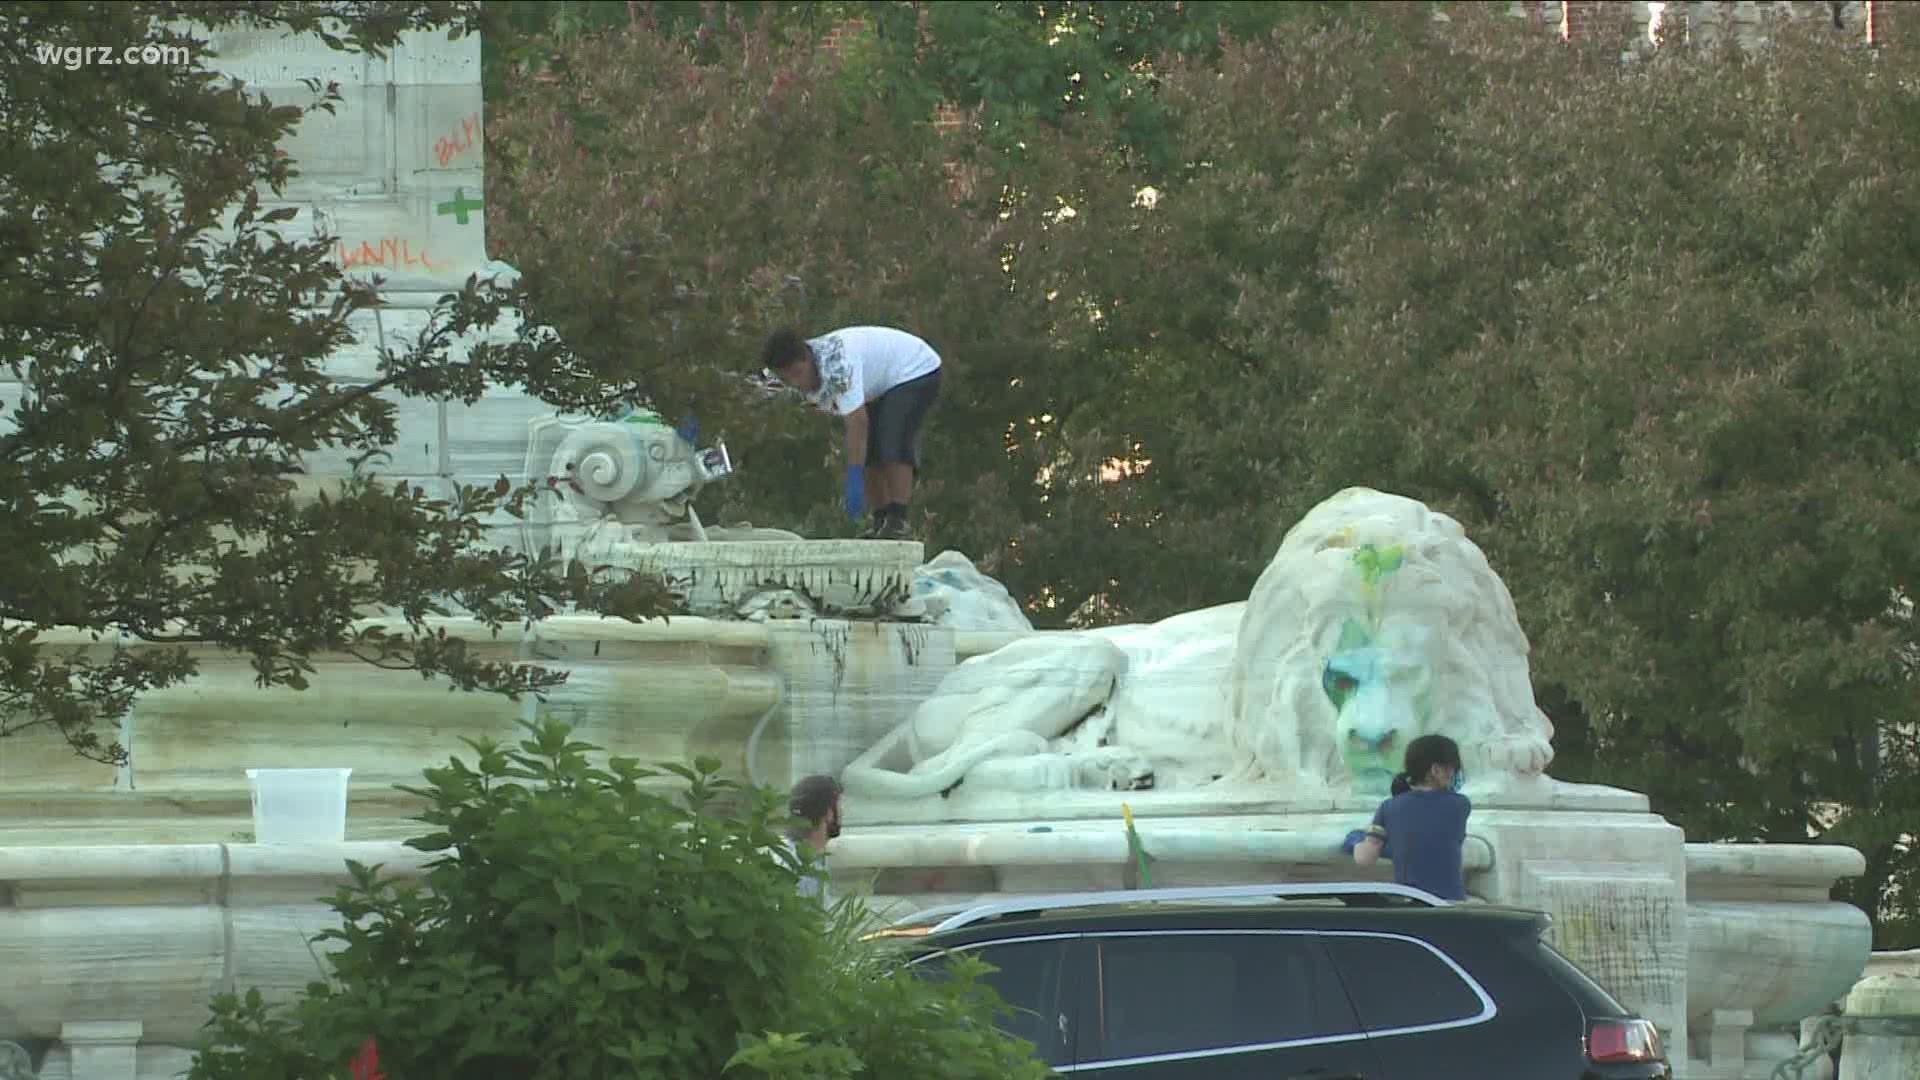 McKinley monument vandalized